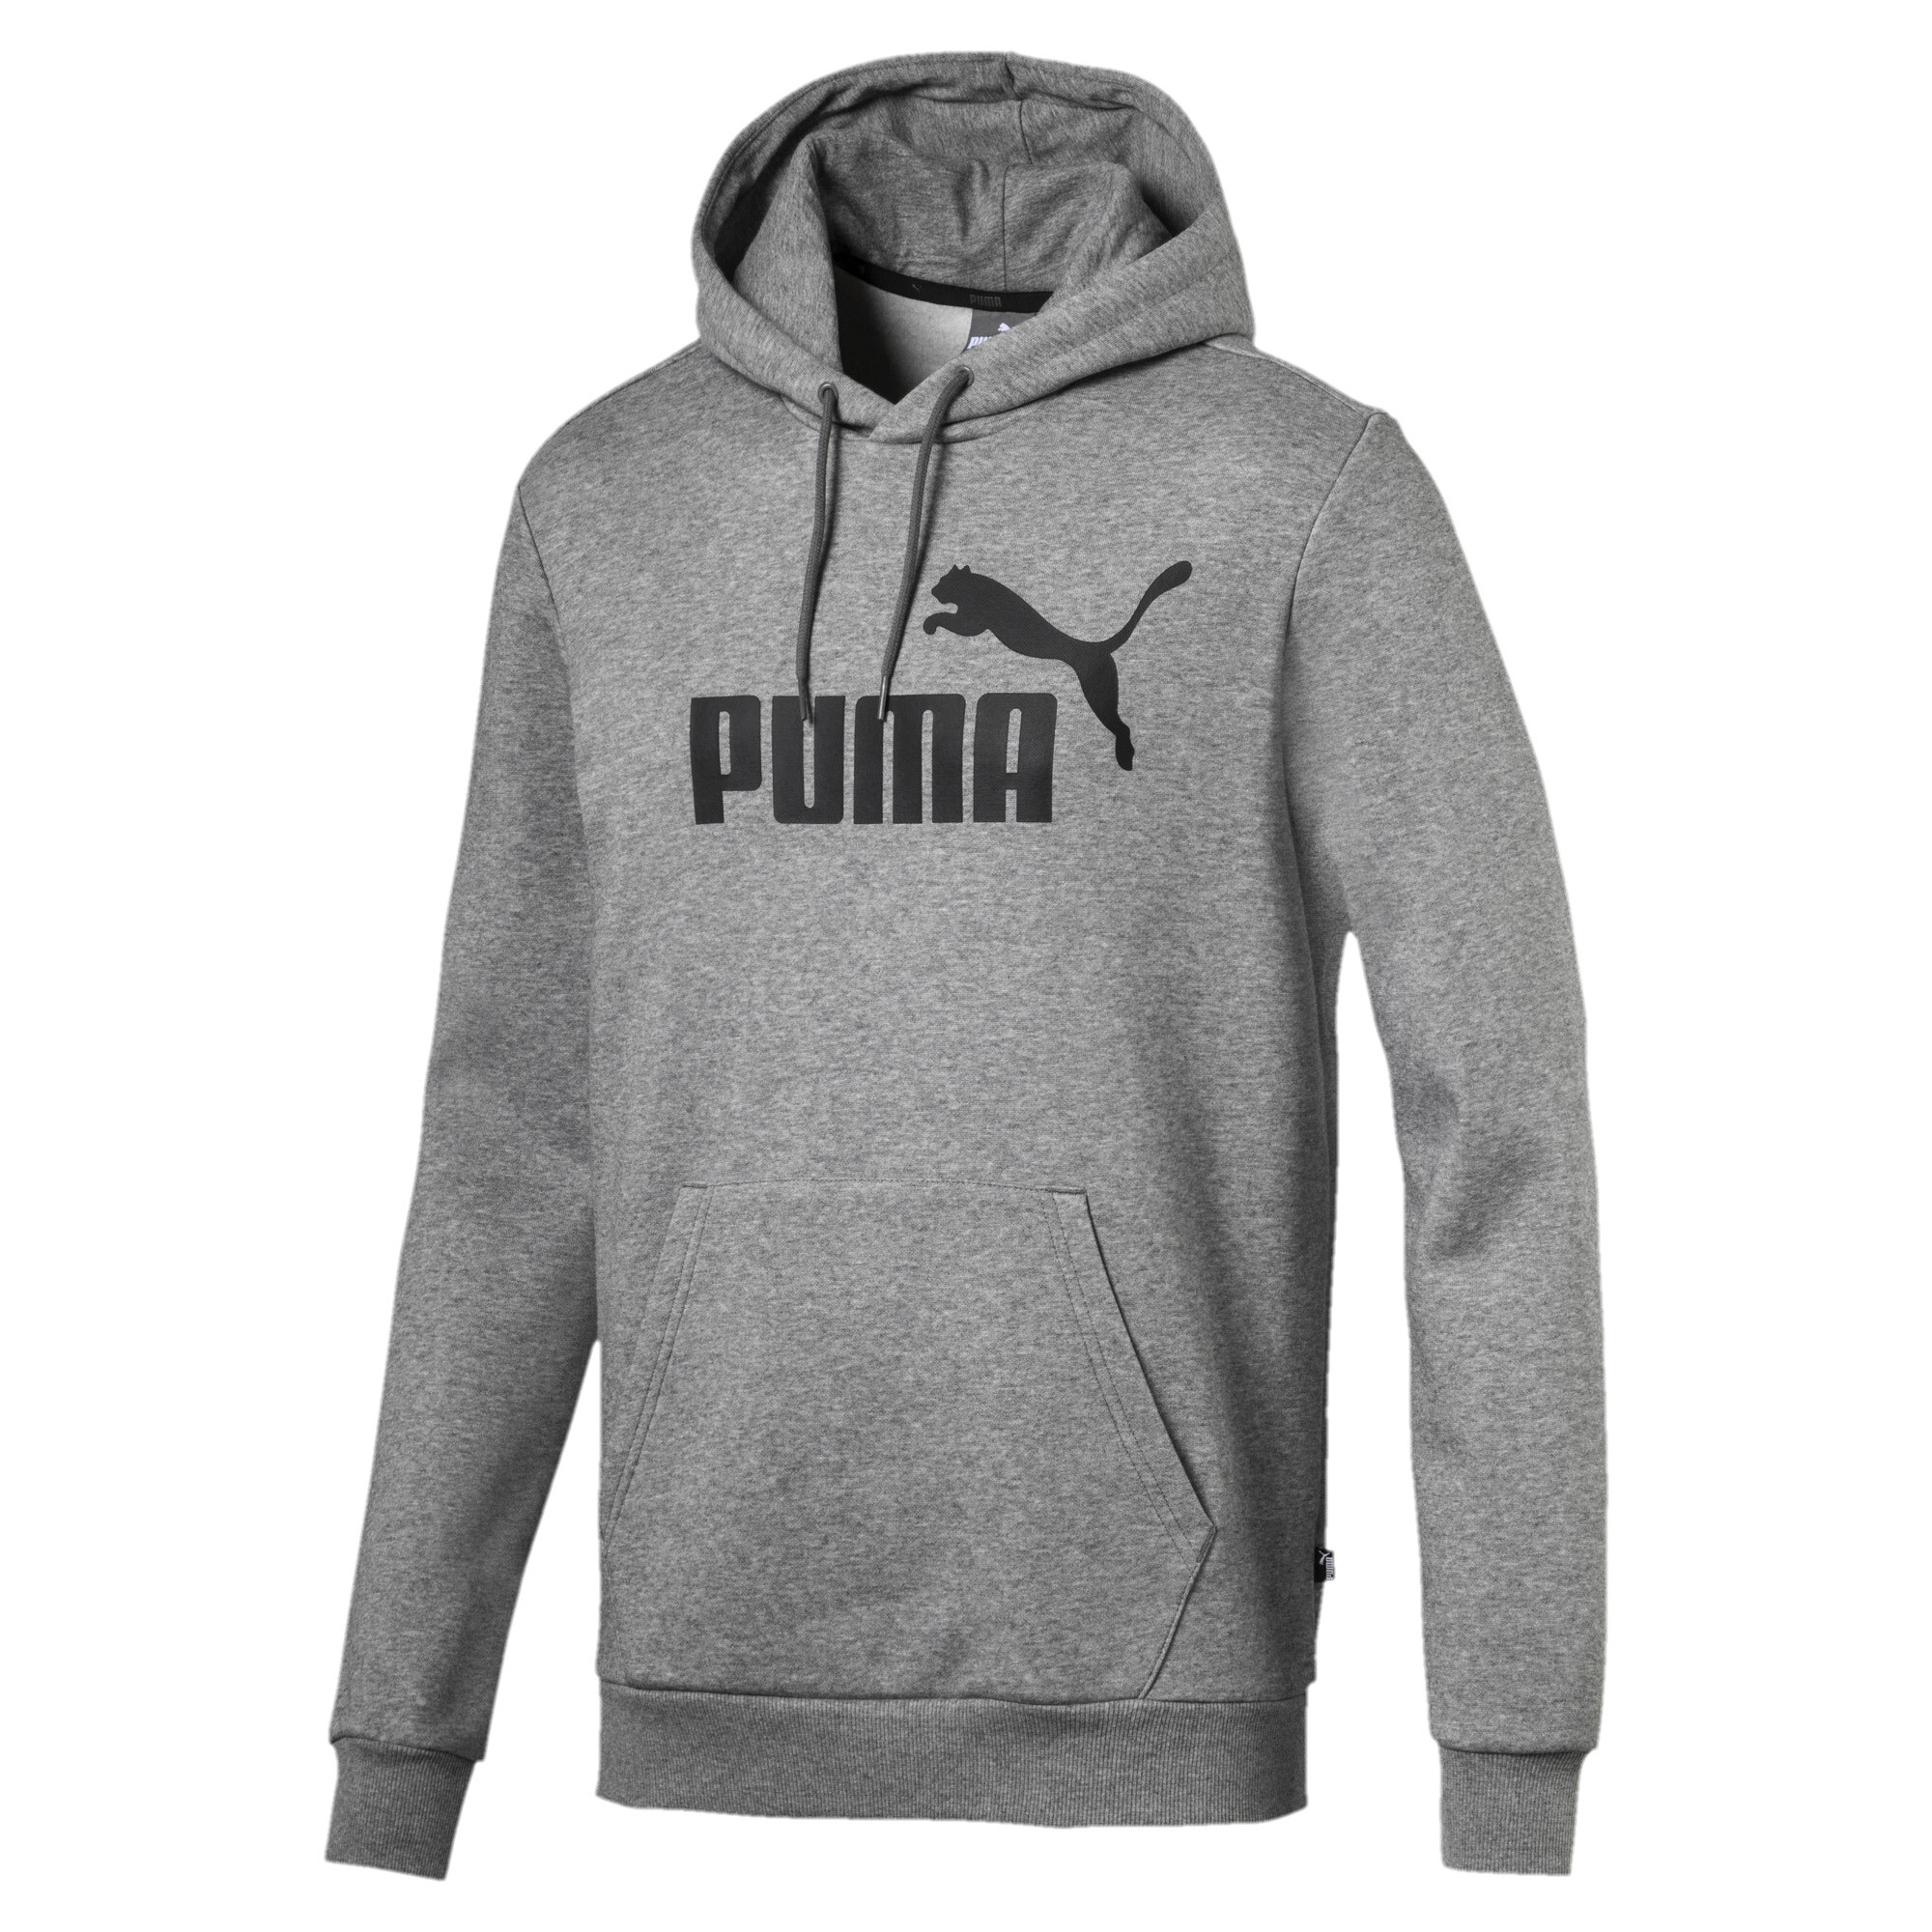 puma jumper womens grey